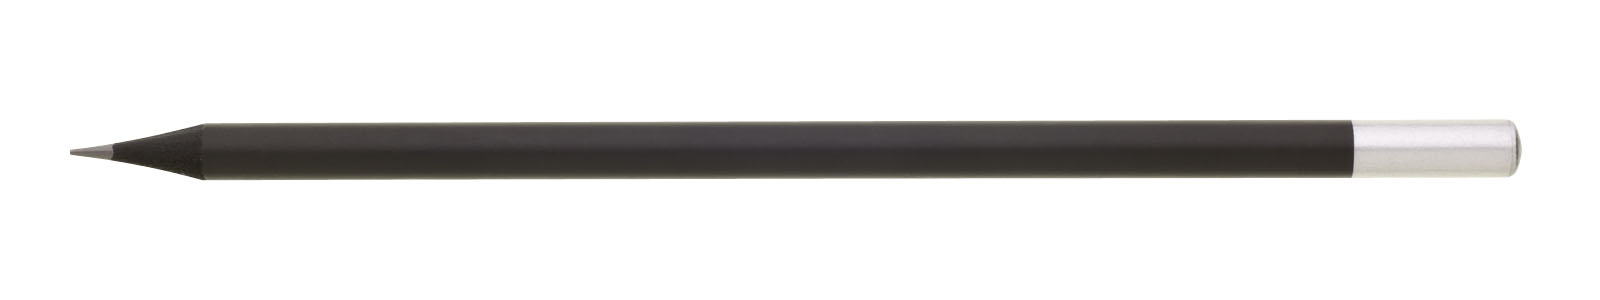 NORIA tužka černá, kulatá, stříbrná